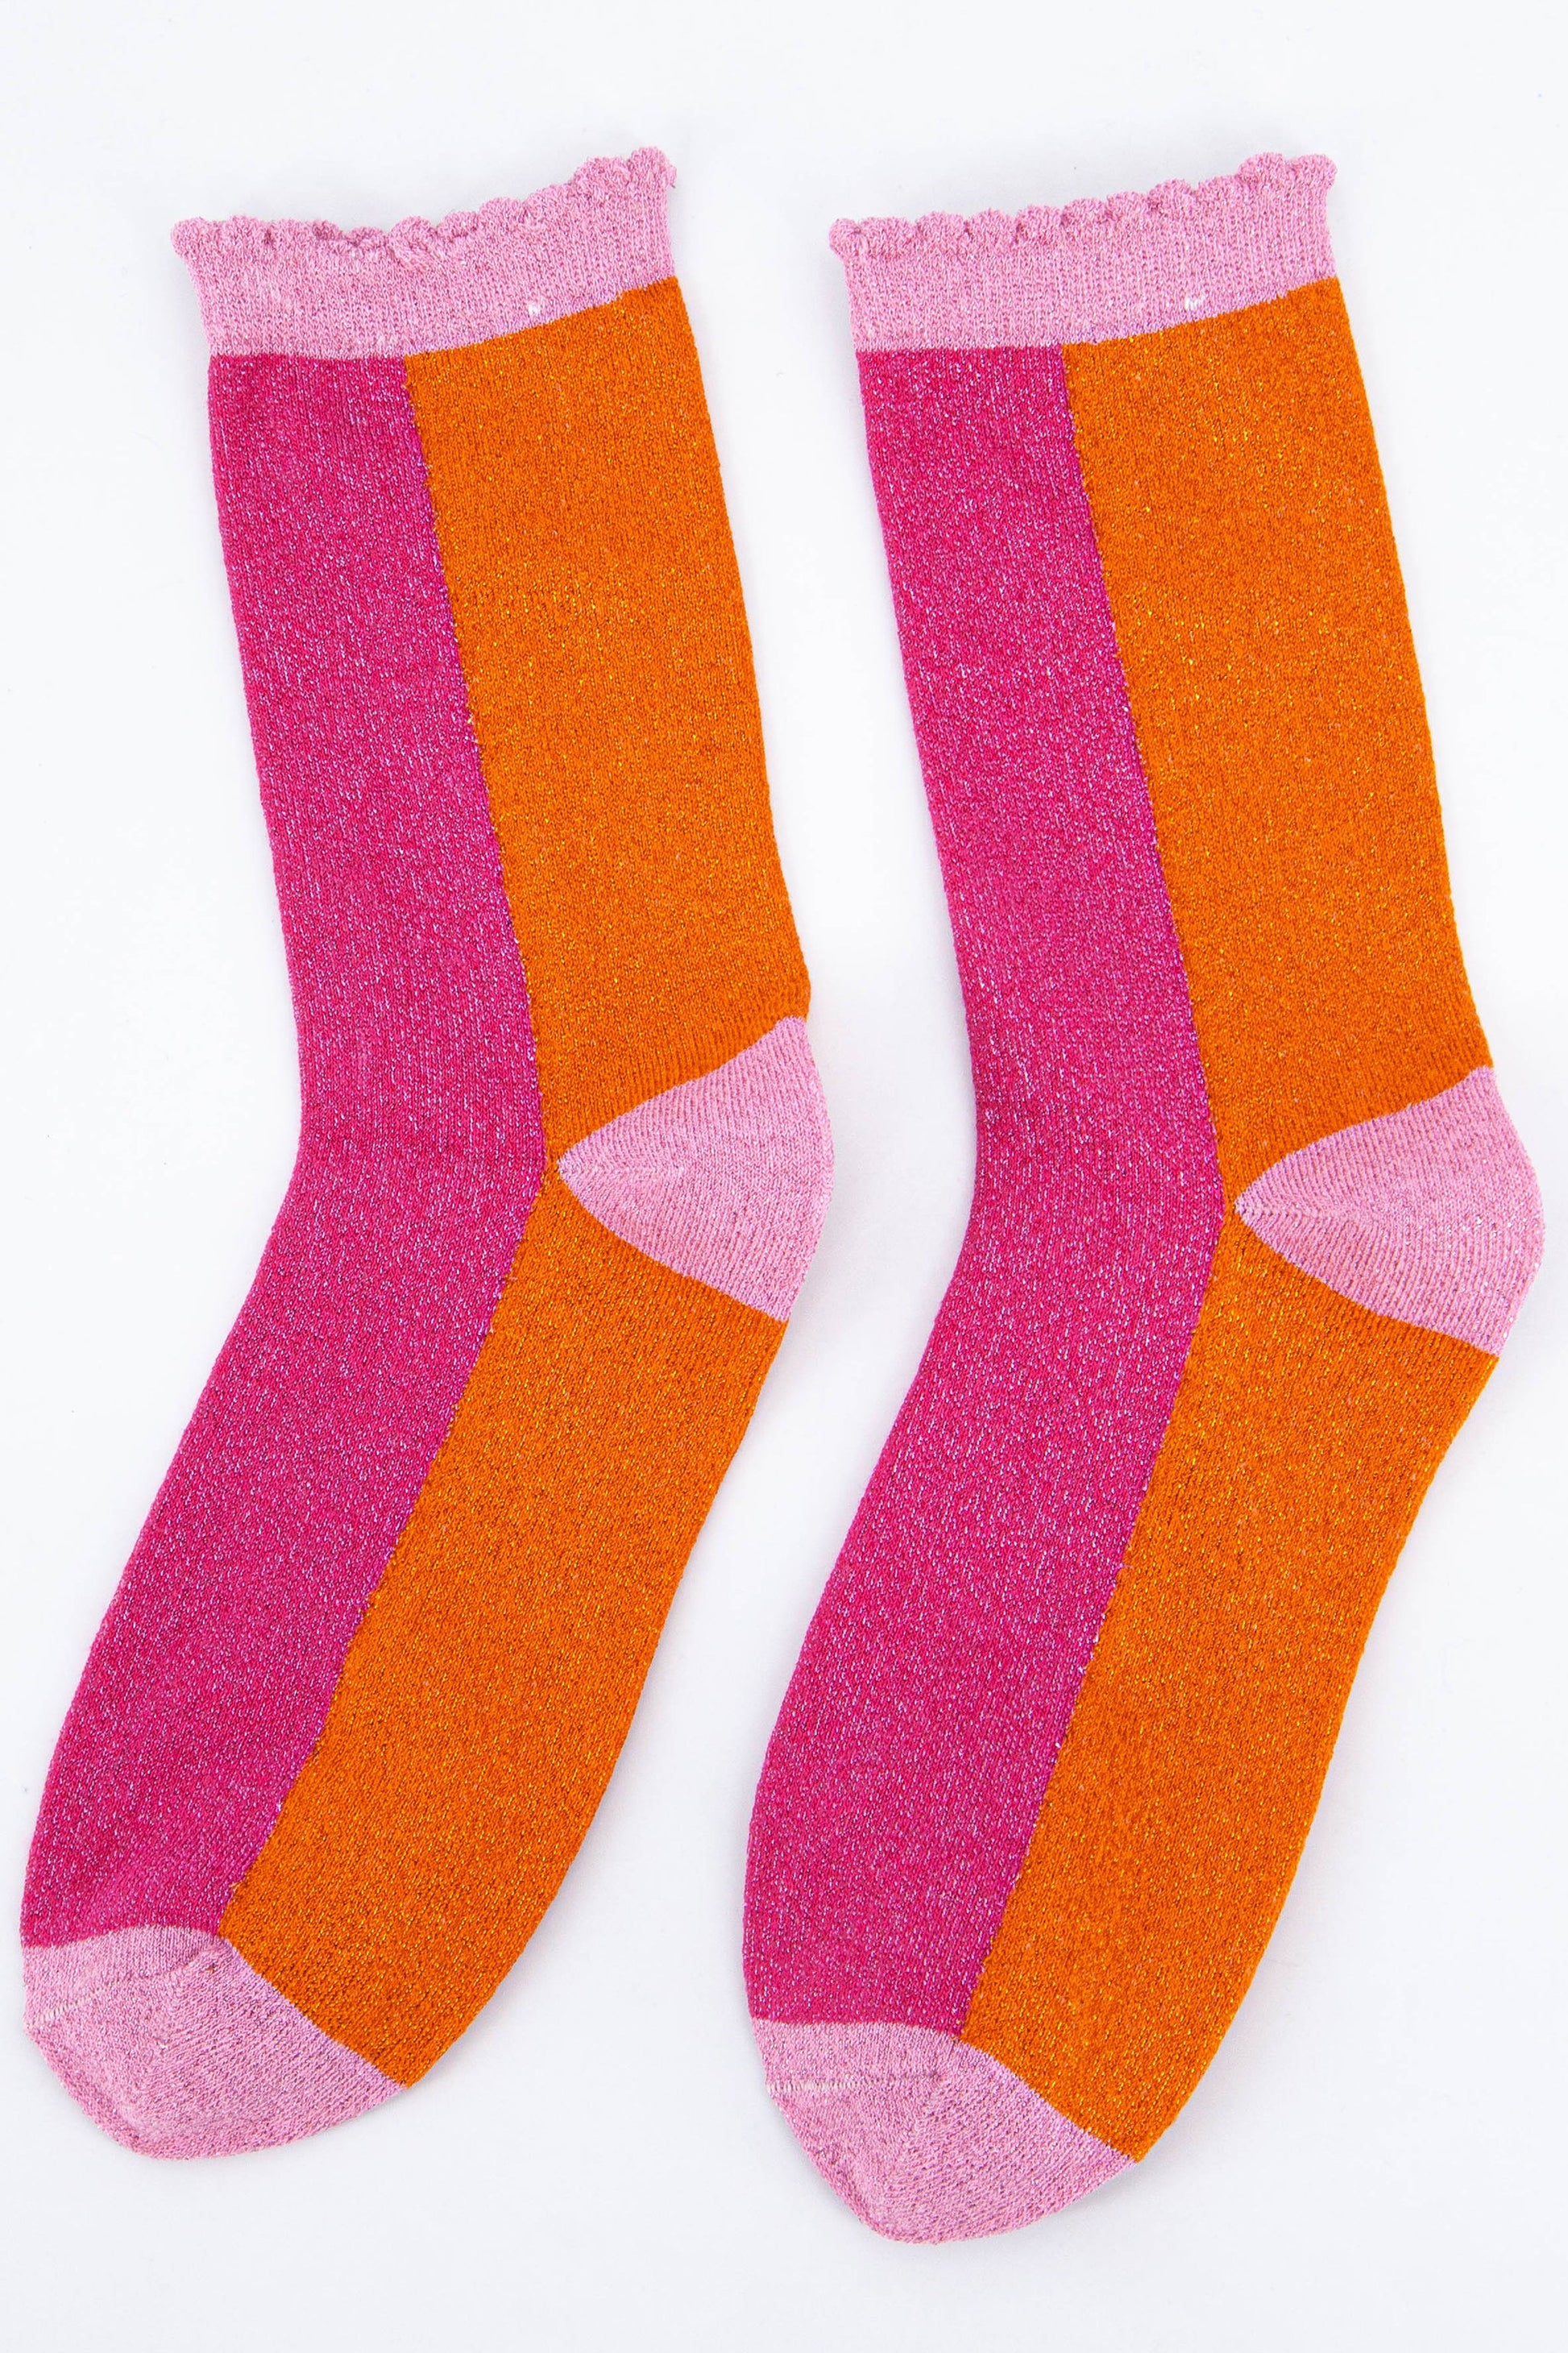 pink and orange sparkly glitter socks for women